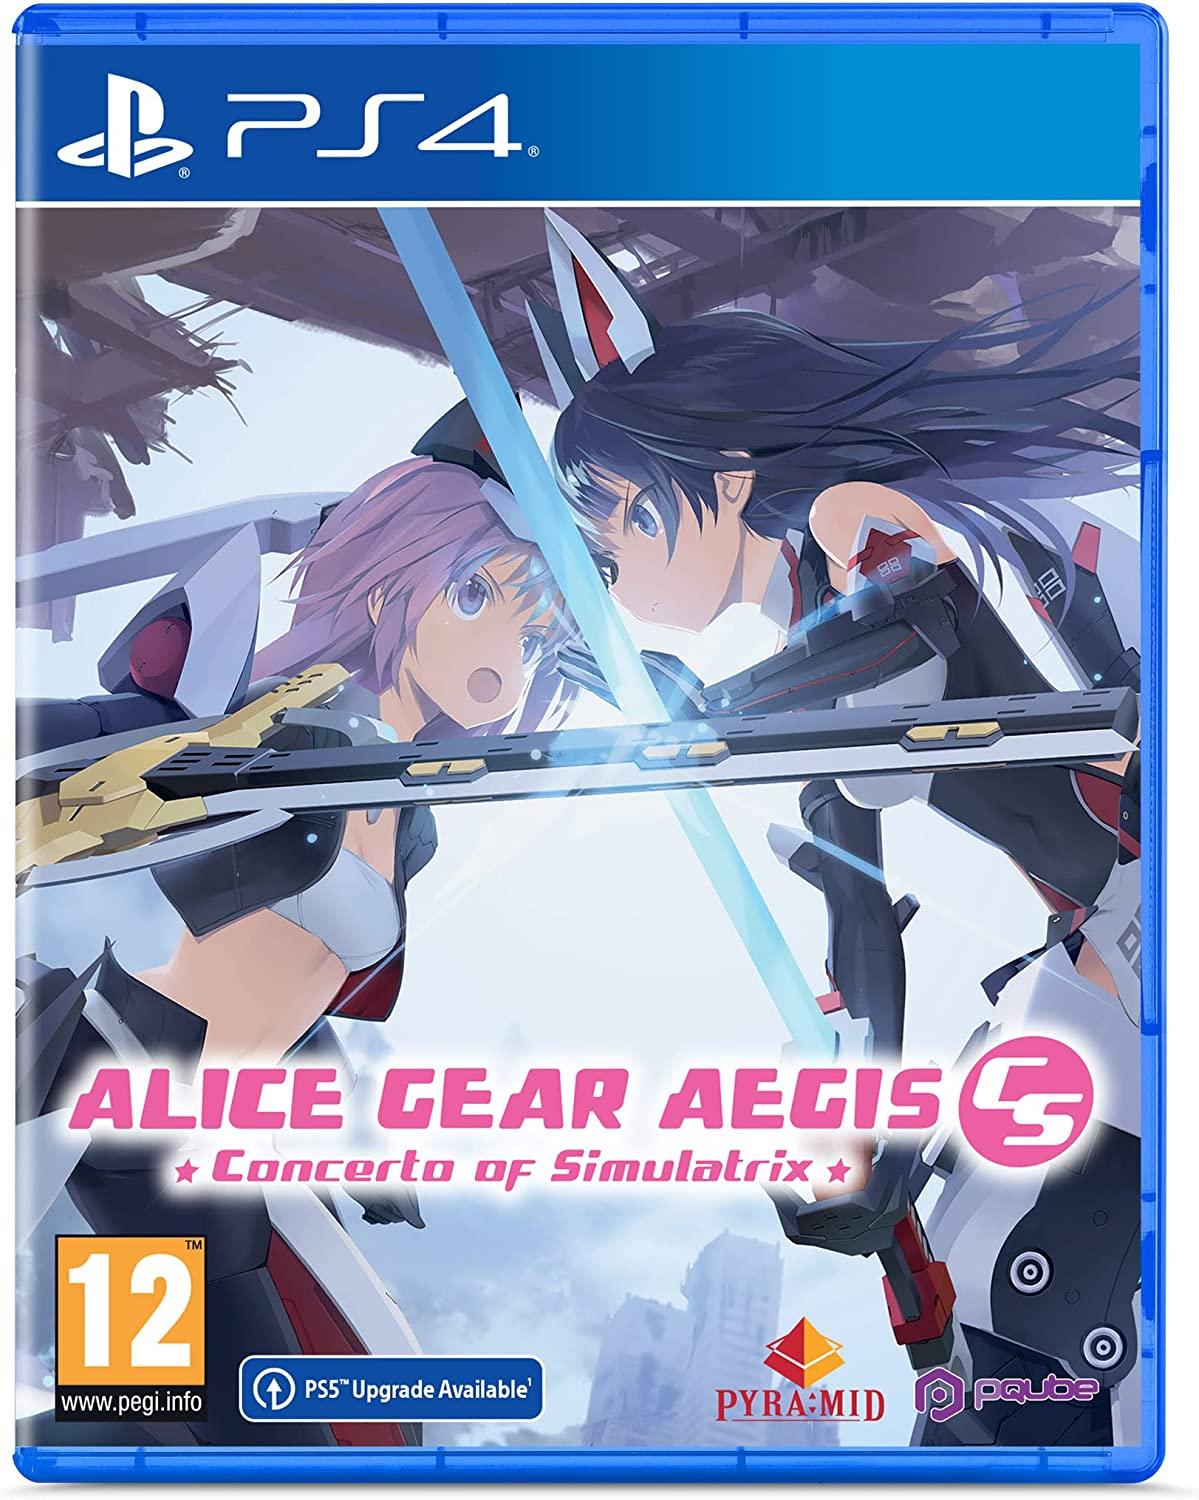 Alice Gear Aegis CS: Concerto of Simulatrix (PS4) - GameStore.mt | Powered by Flutisat